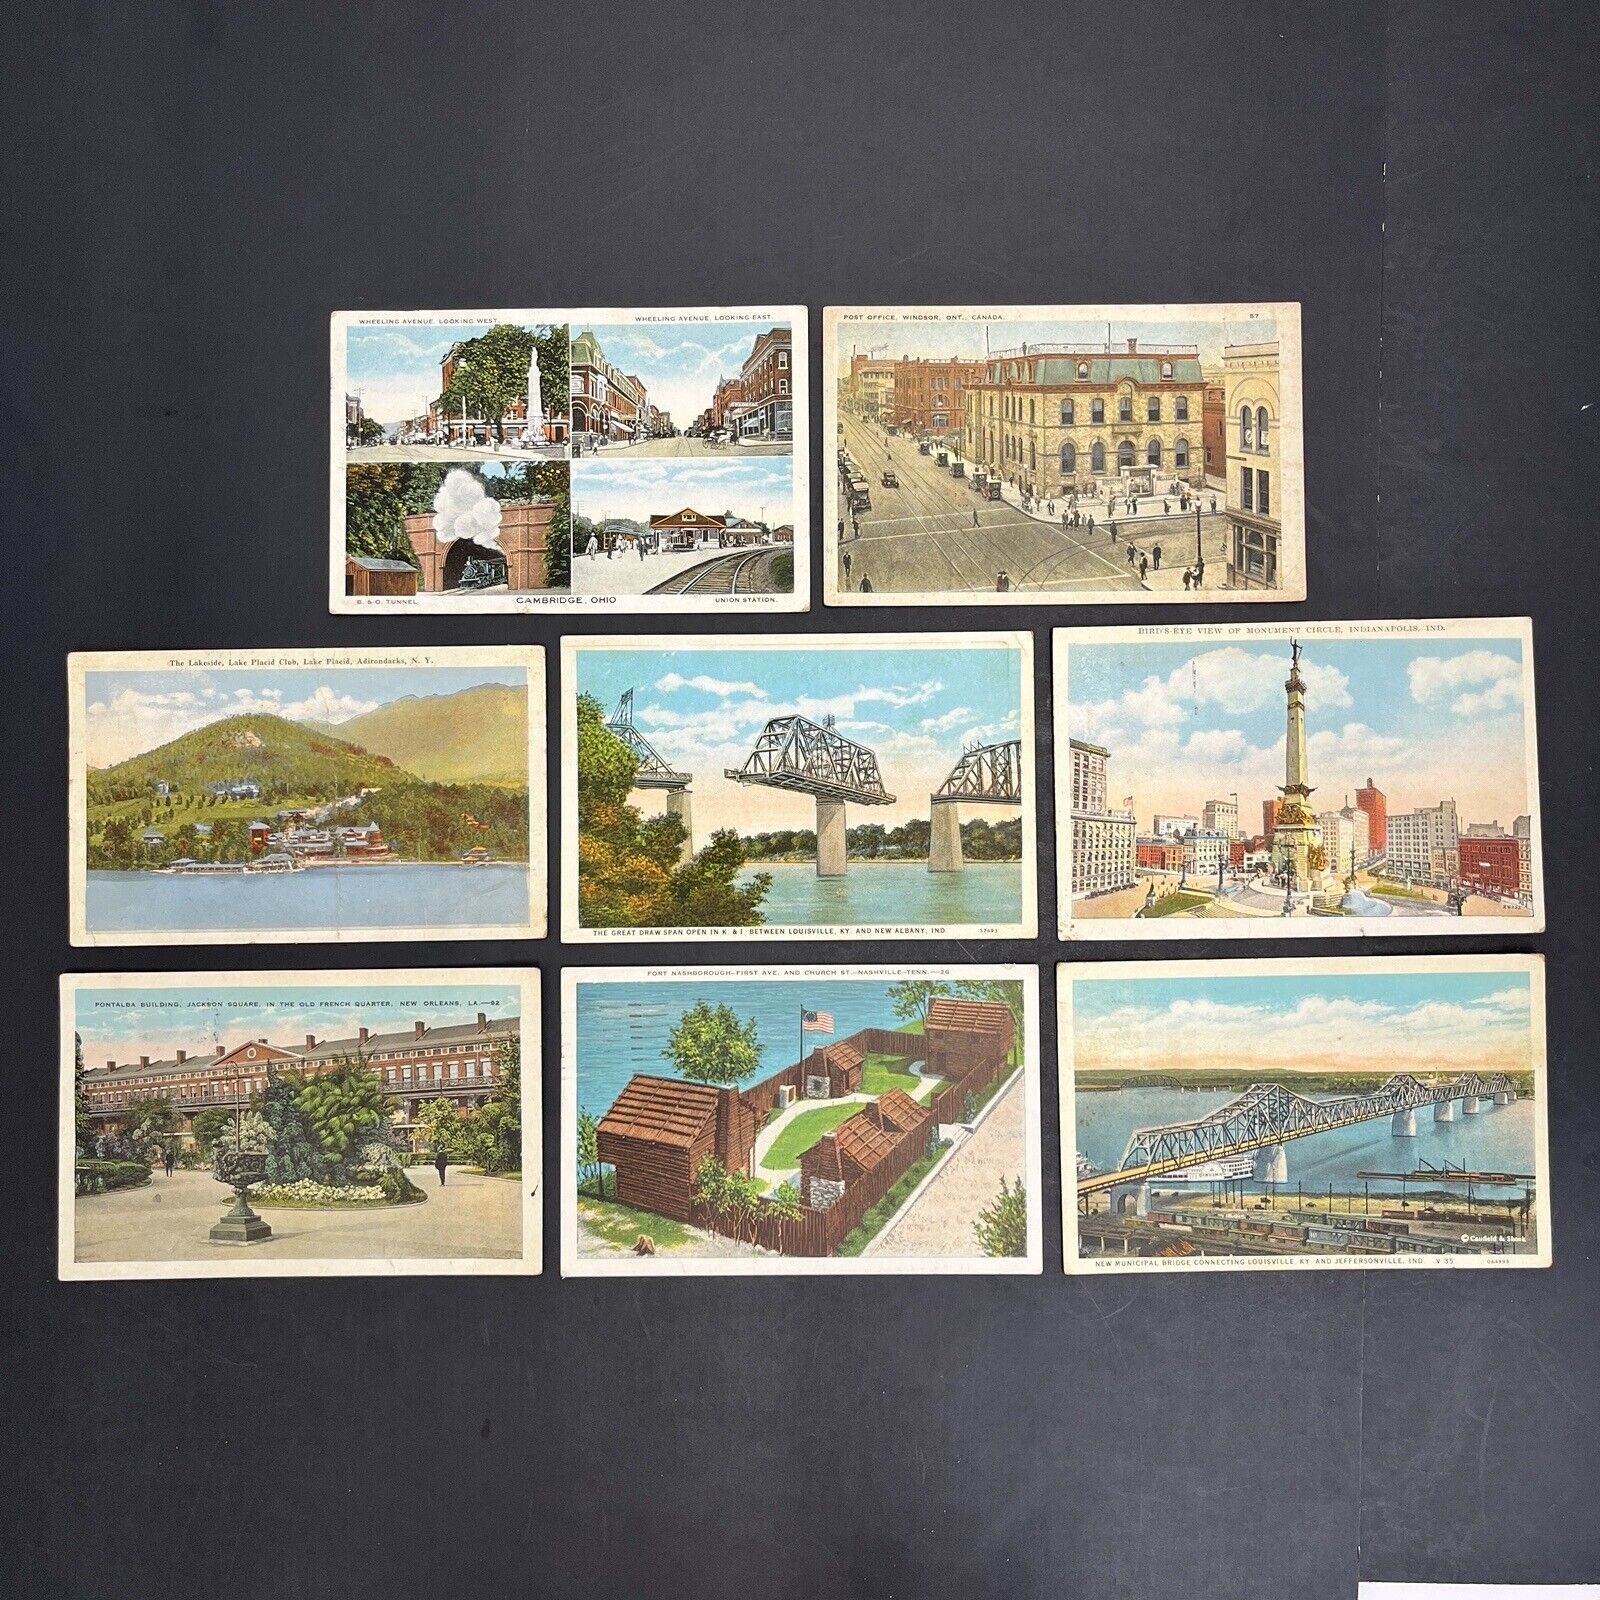 VTG Postcards 1920s-30s KY, TN, Ohio, Canada - EC Kropp, DeWolf News LOT OF 8